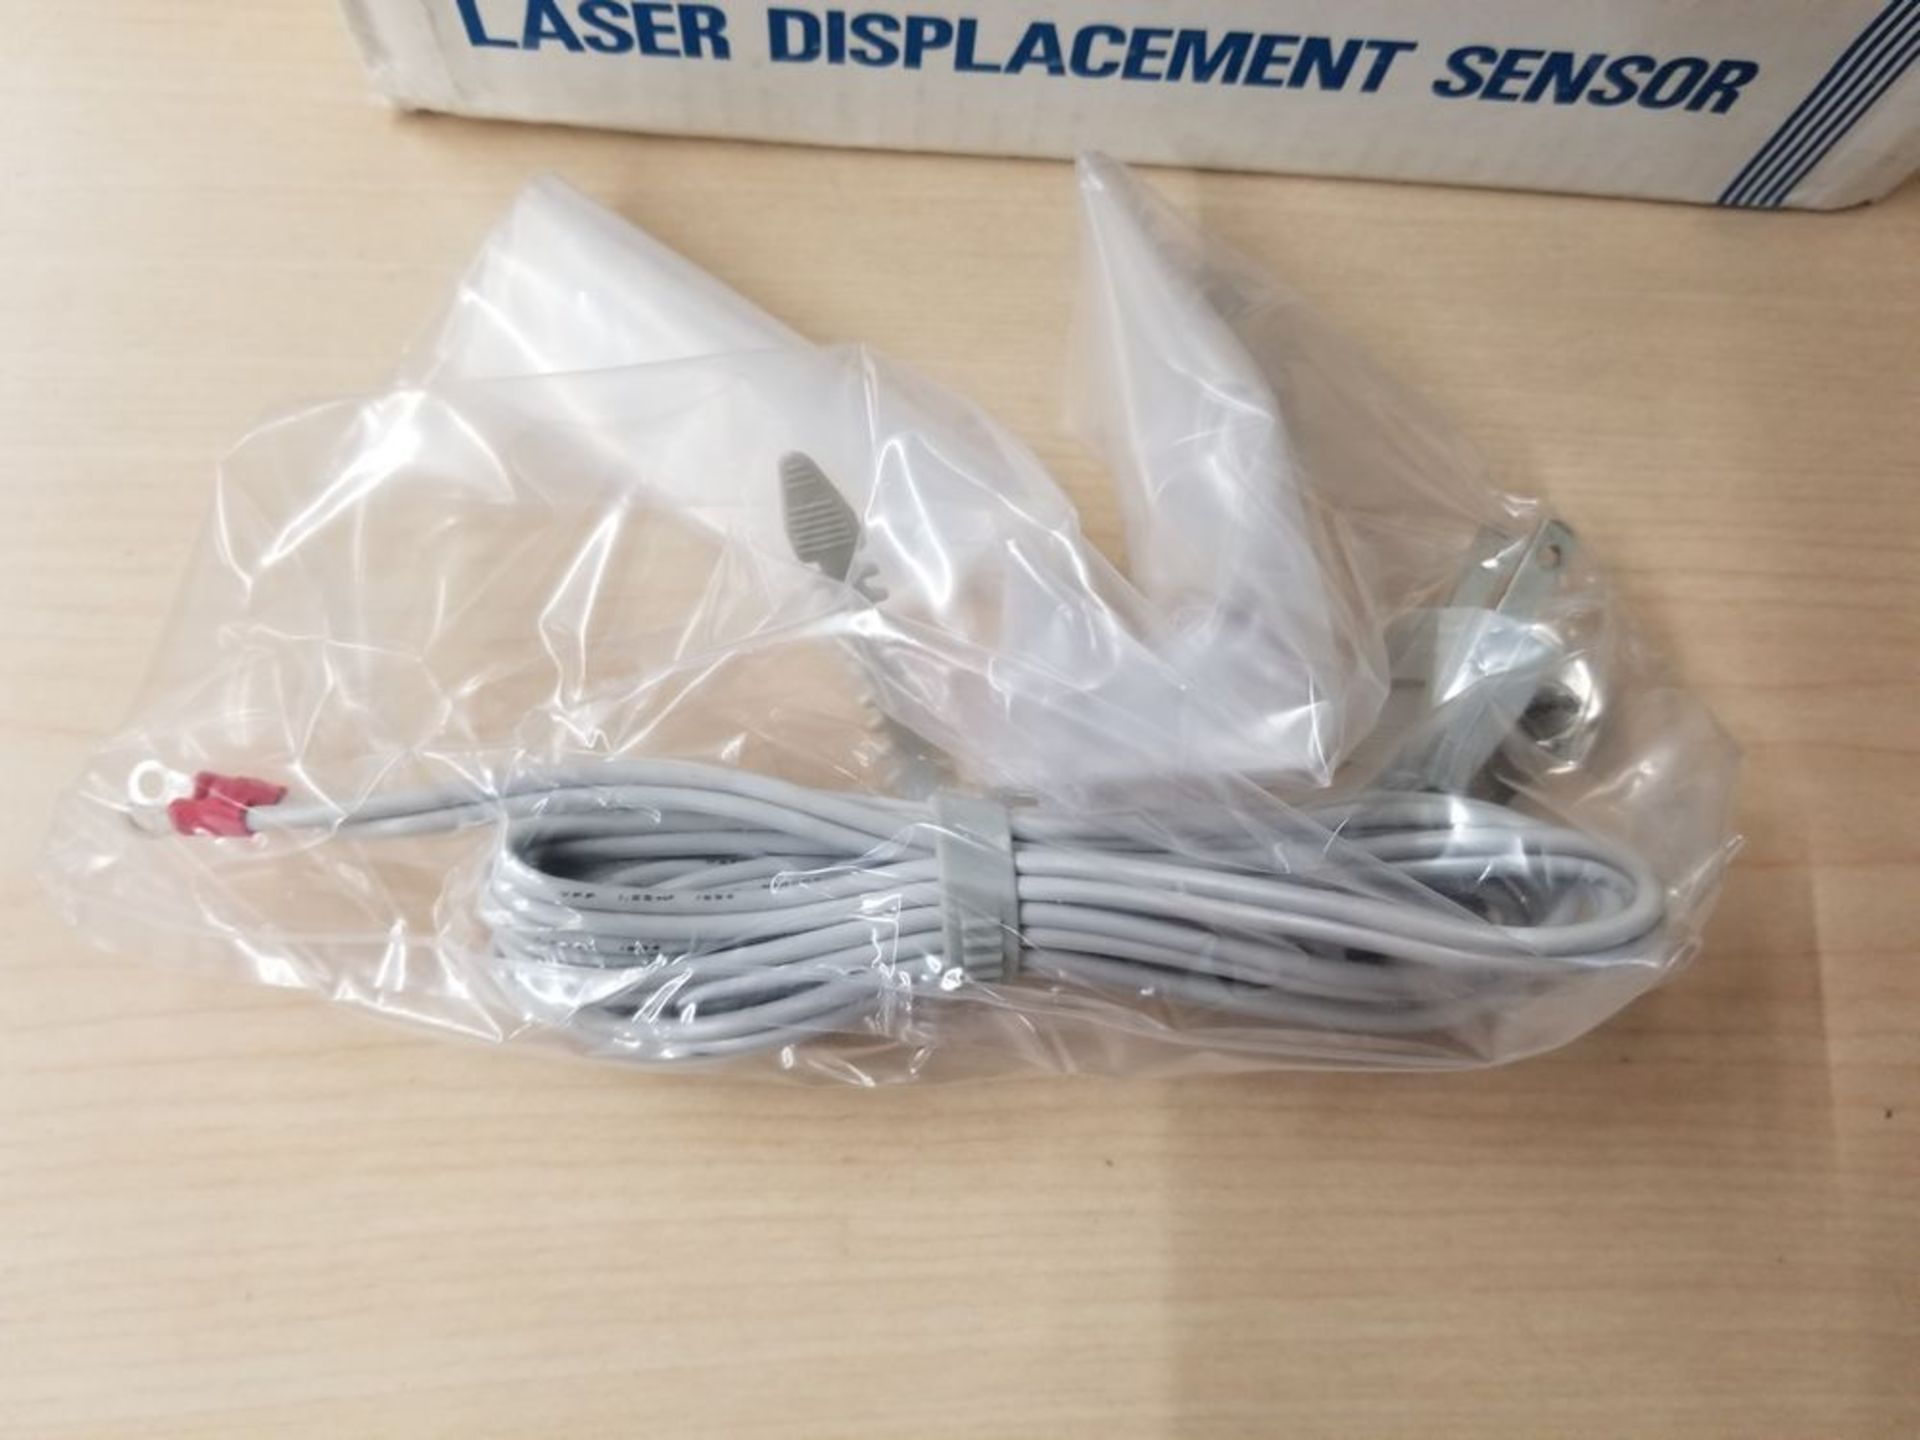 New IDEC Laser Displacment Sensor & Controller - Image 9 of 11